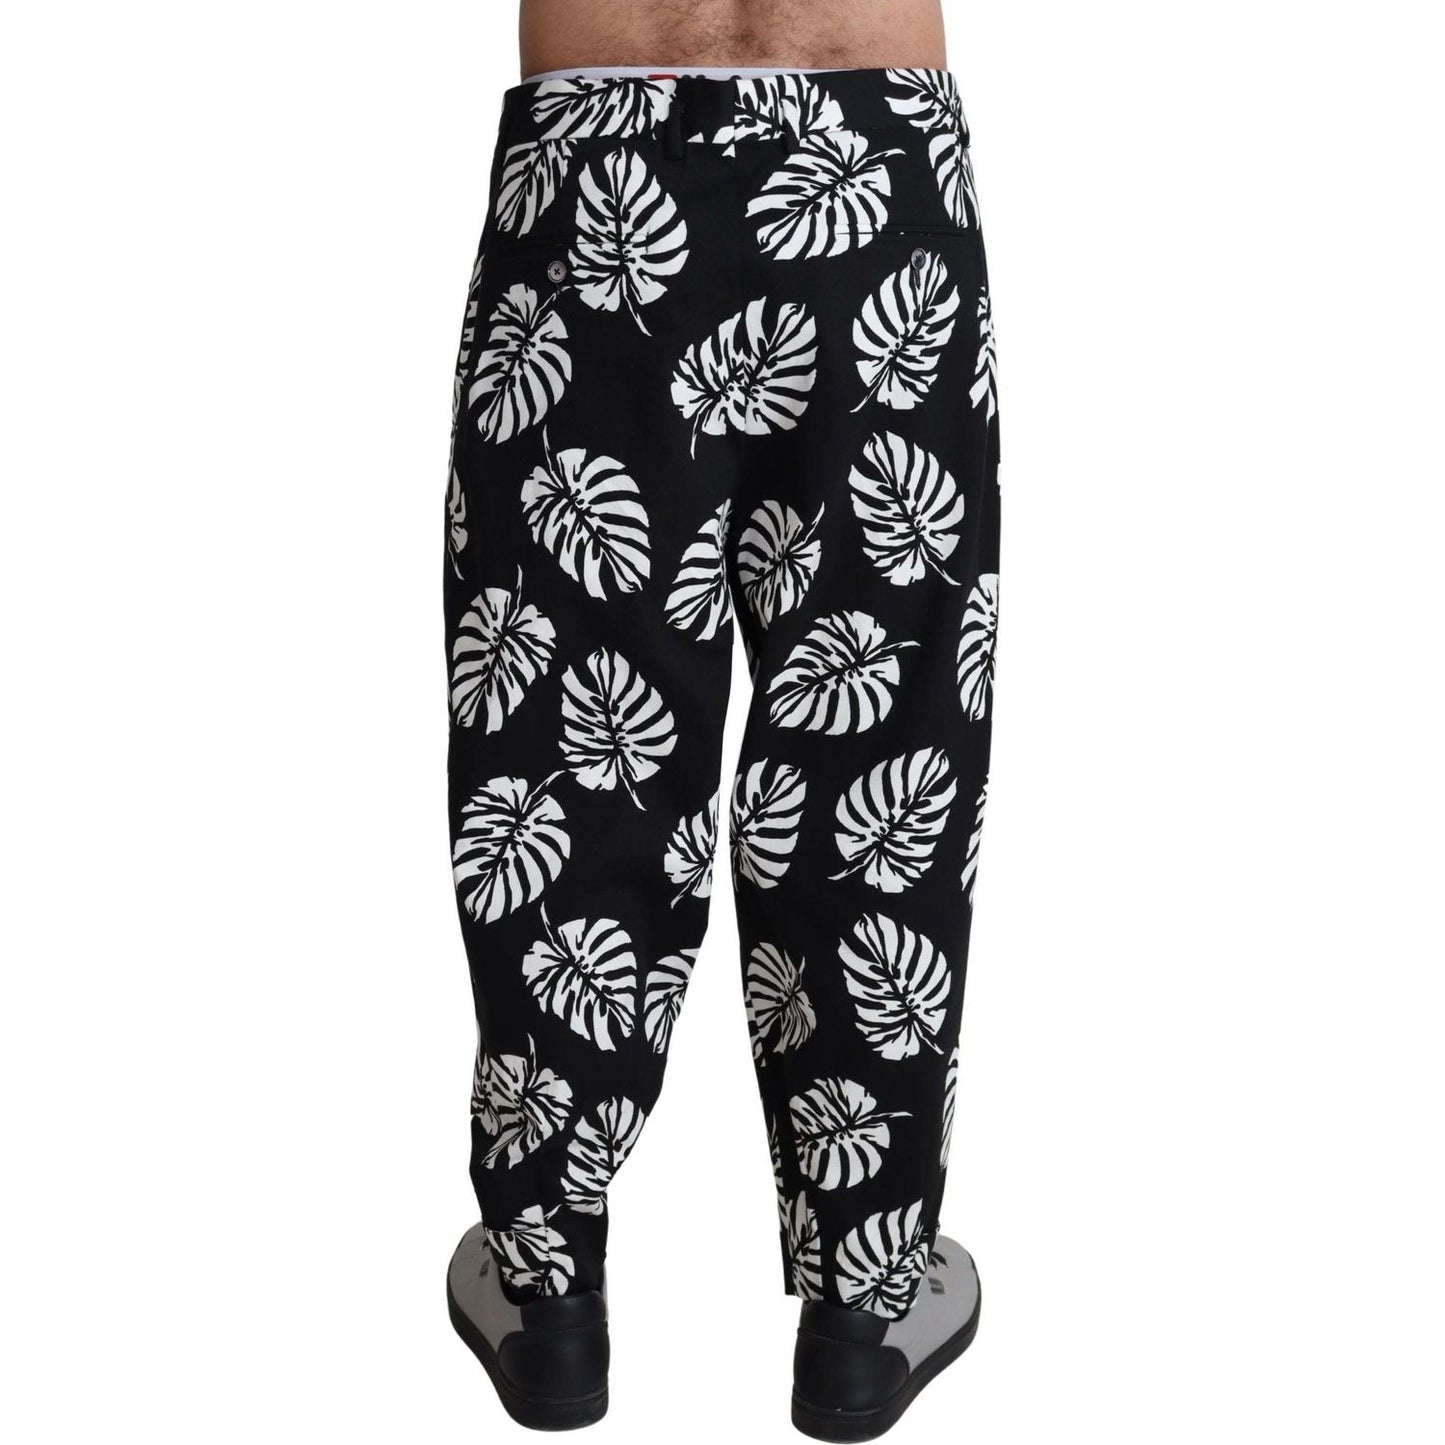 Dolce & Gabbana Elegant Palm Leaf Print Cotton Trousers black-leaf-cotton-stretch-trouser-pants-pants IMG_2508-scaled-f164fecd-bae.jpg